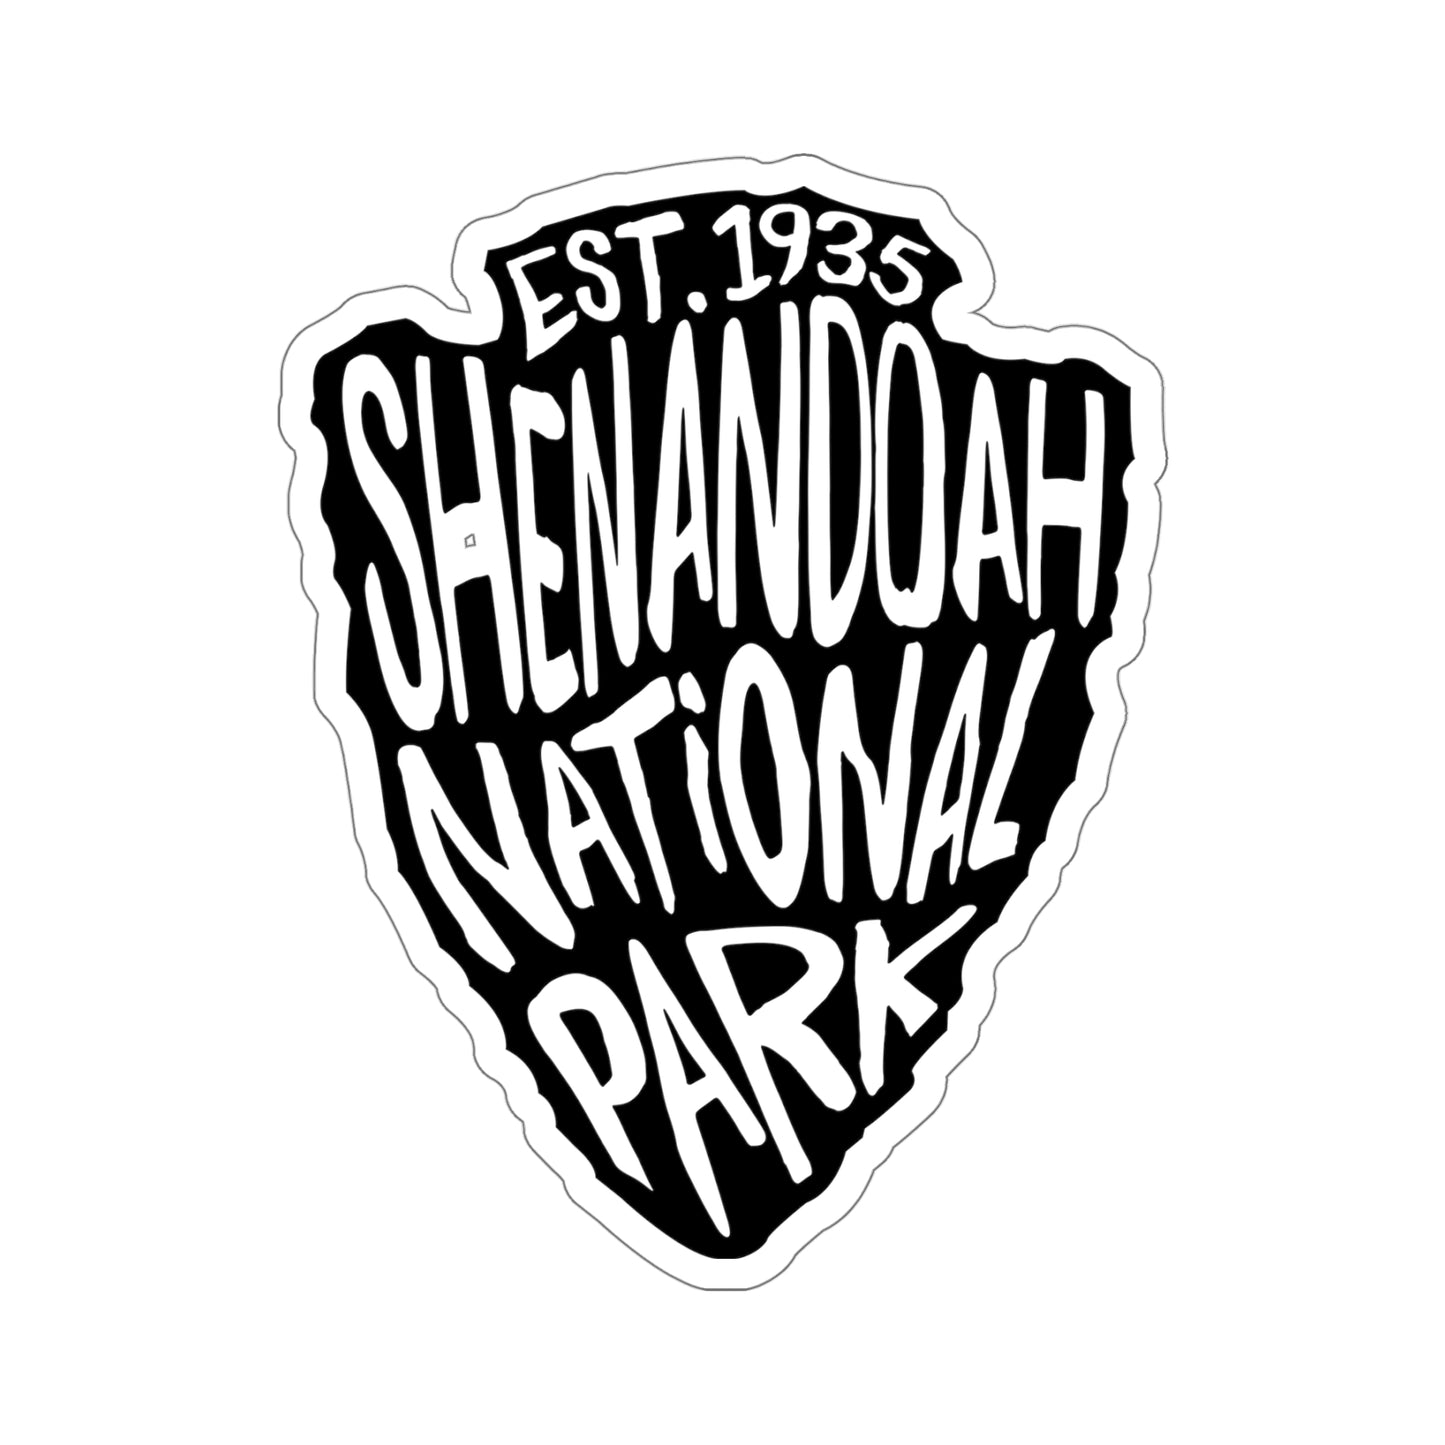 Shenandoah National Park Sticker - Arrow Head Design